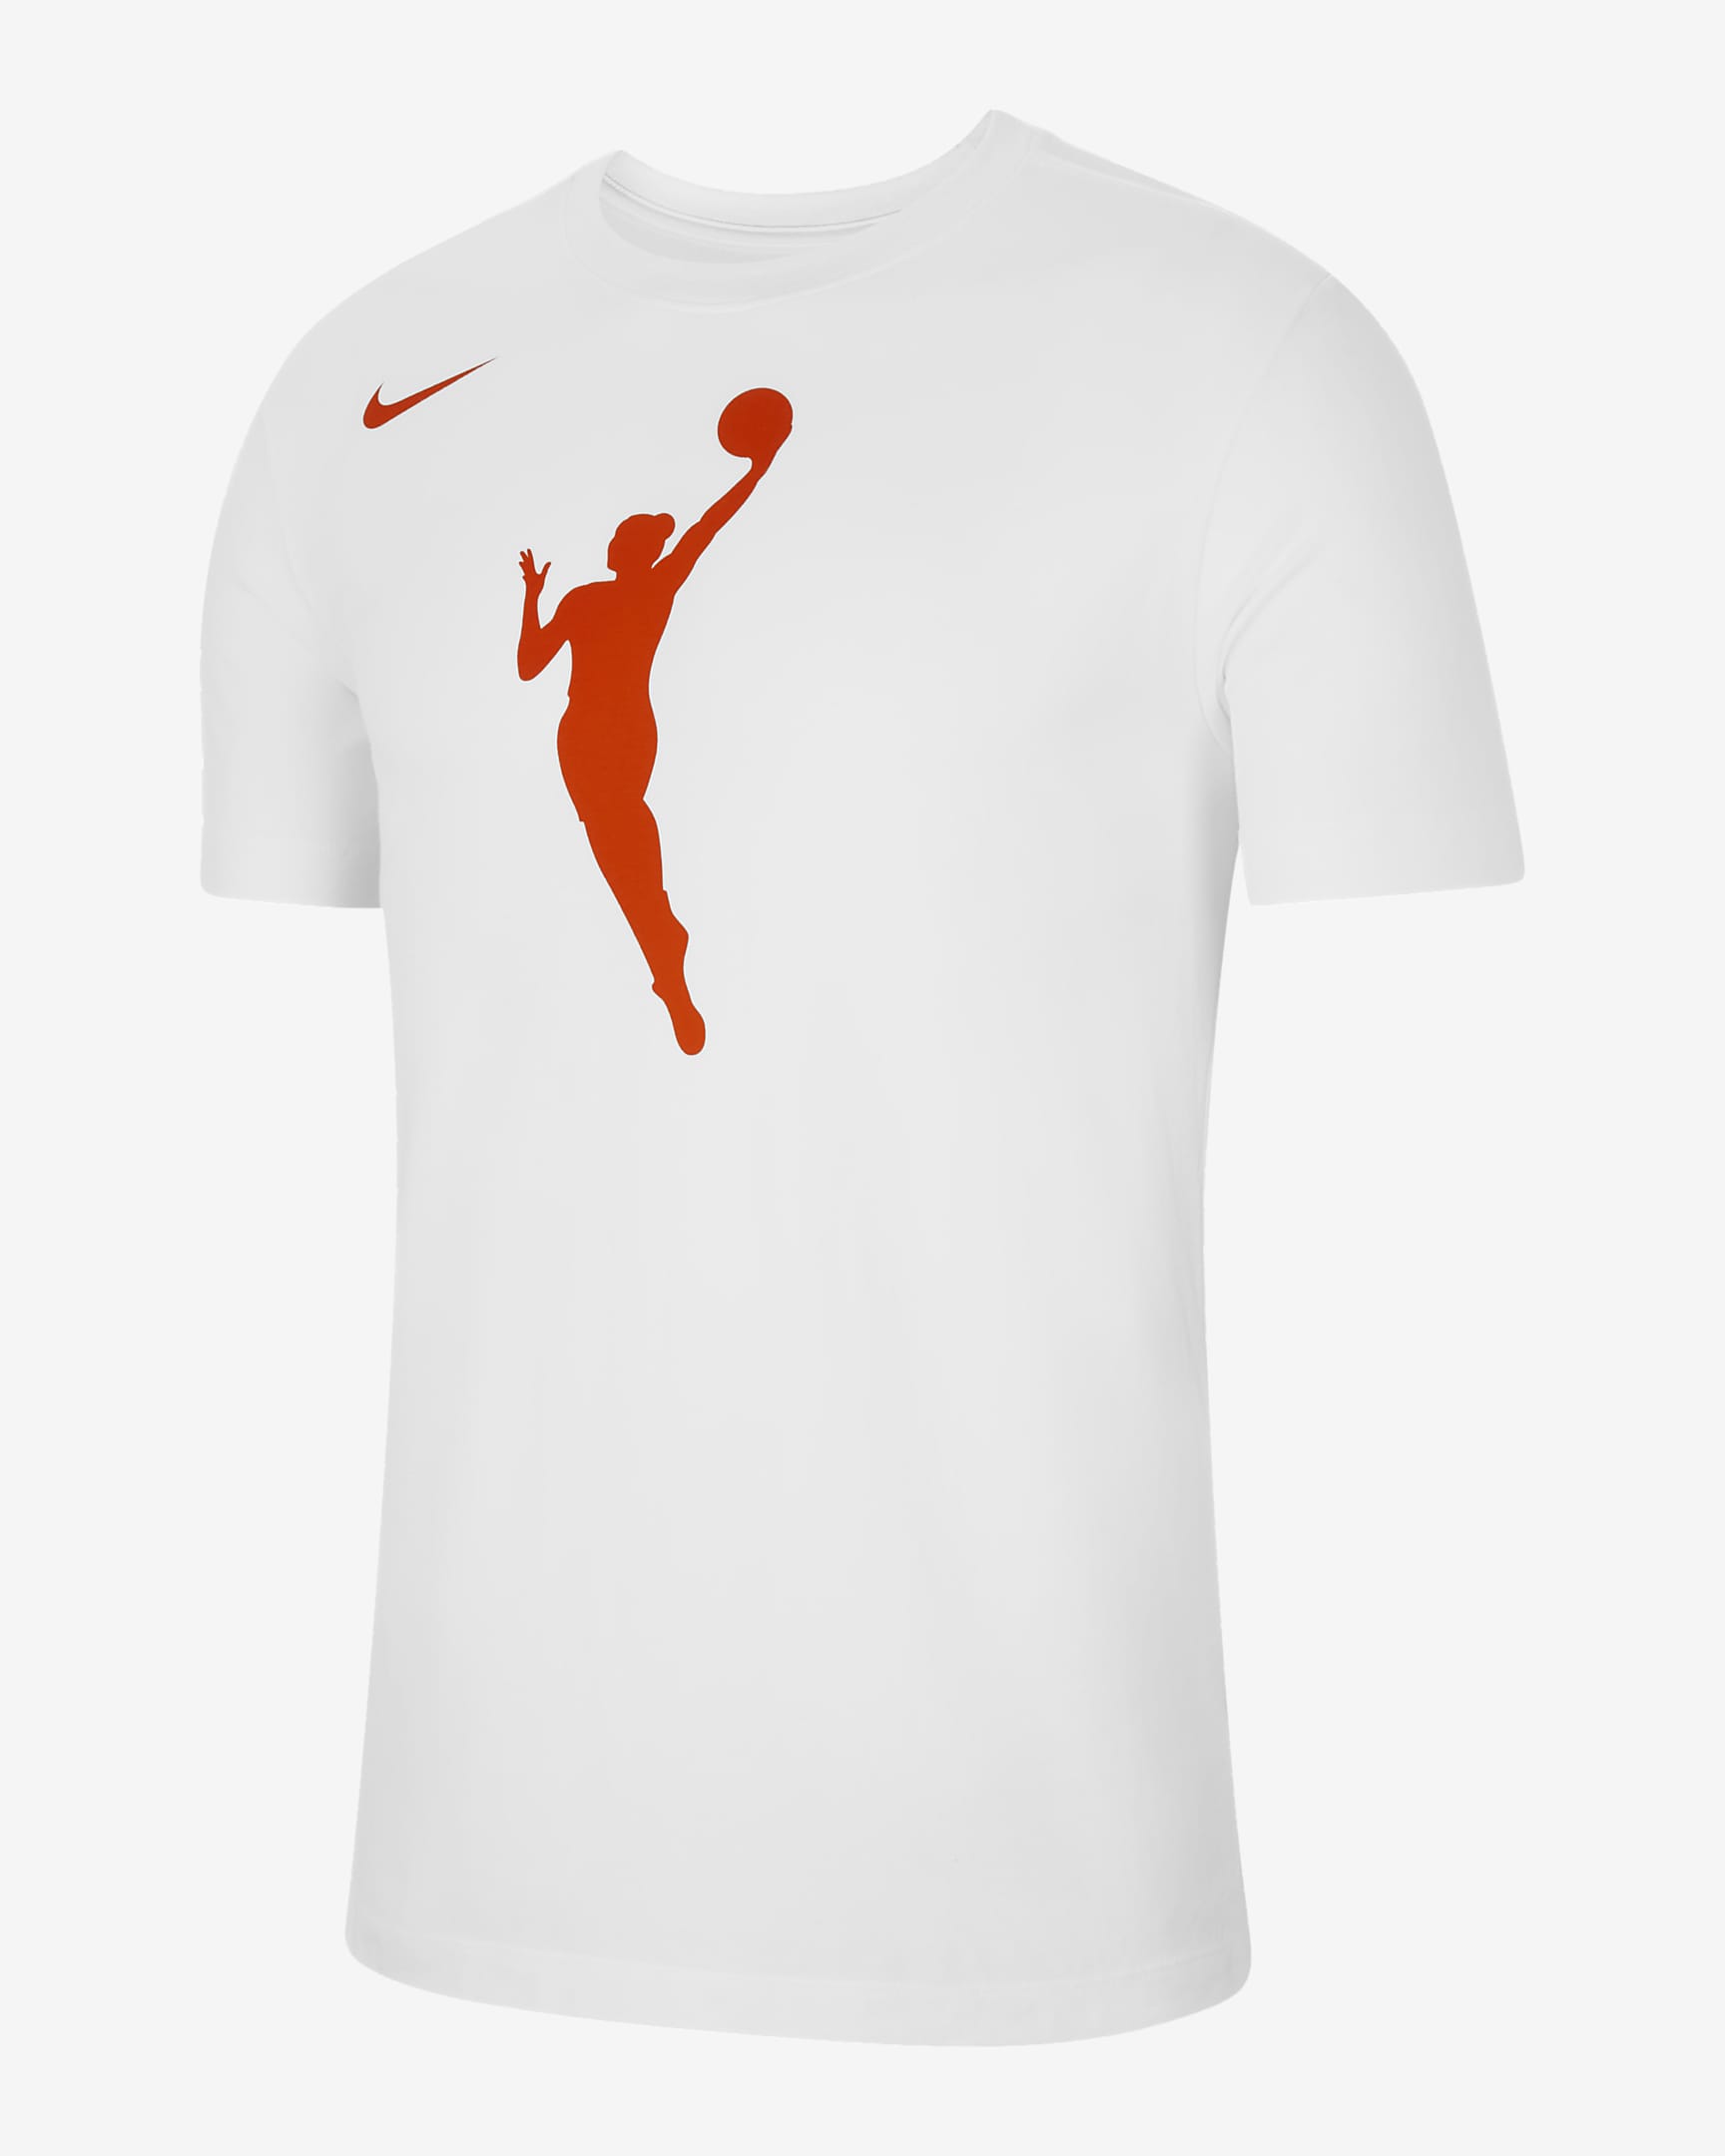 WNBA Nike Dri-FIT T-Shirt. Nike.com